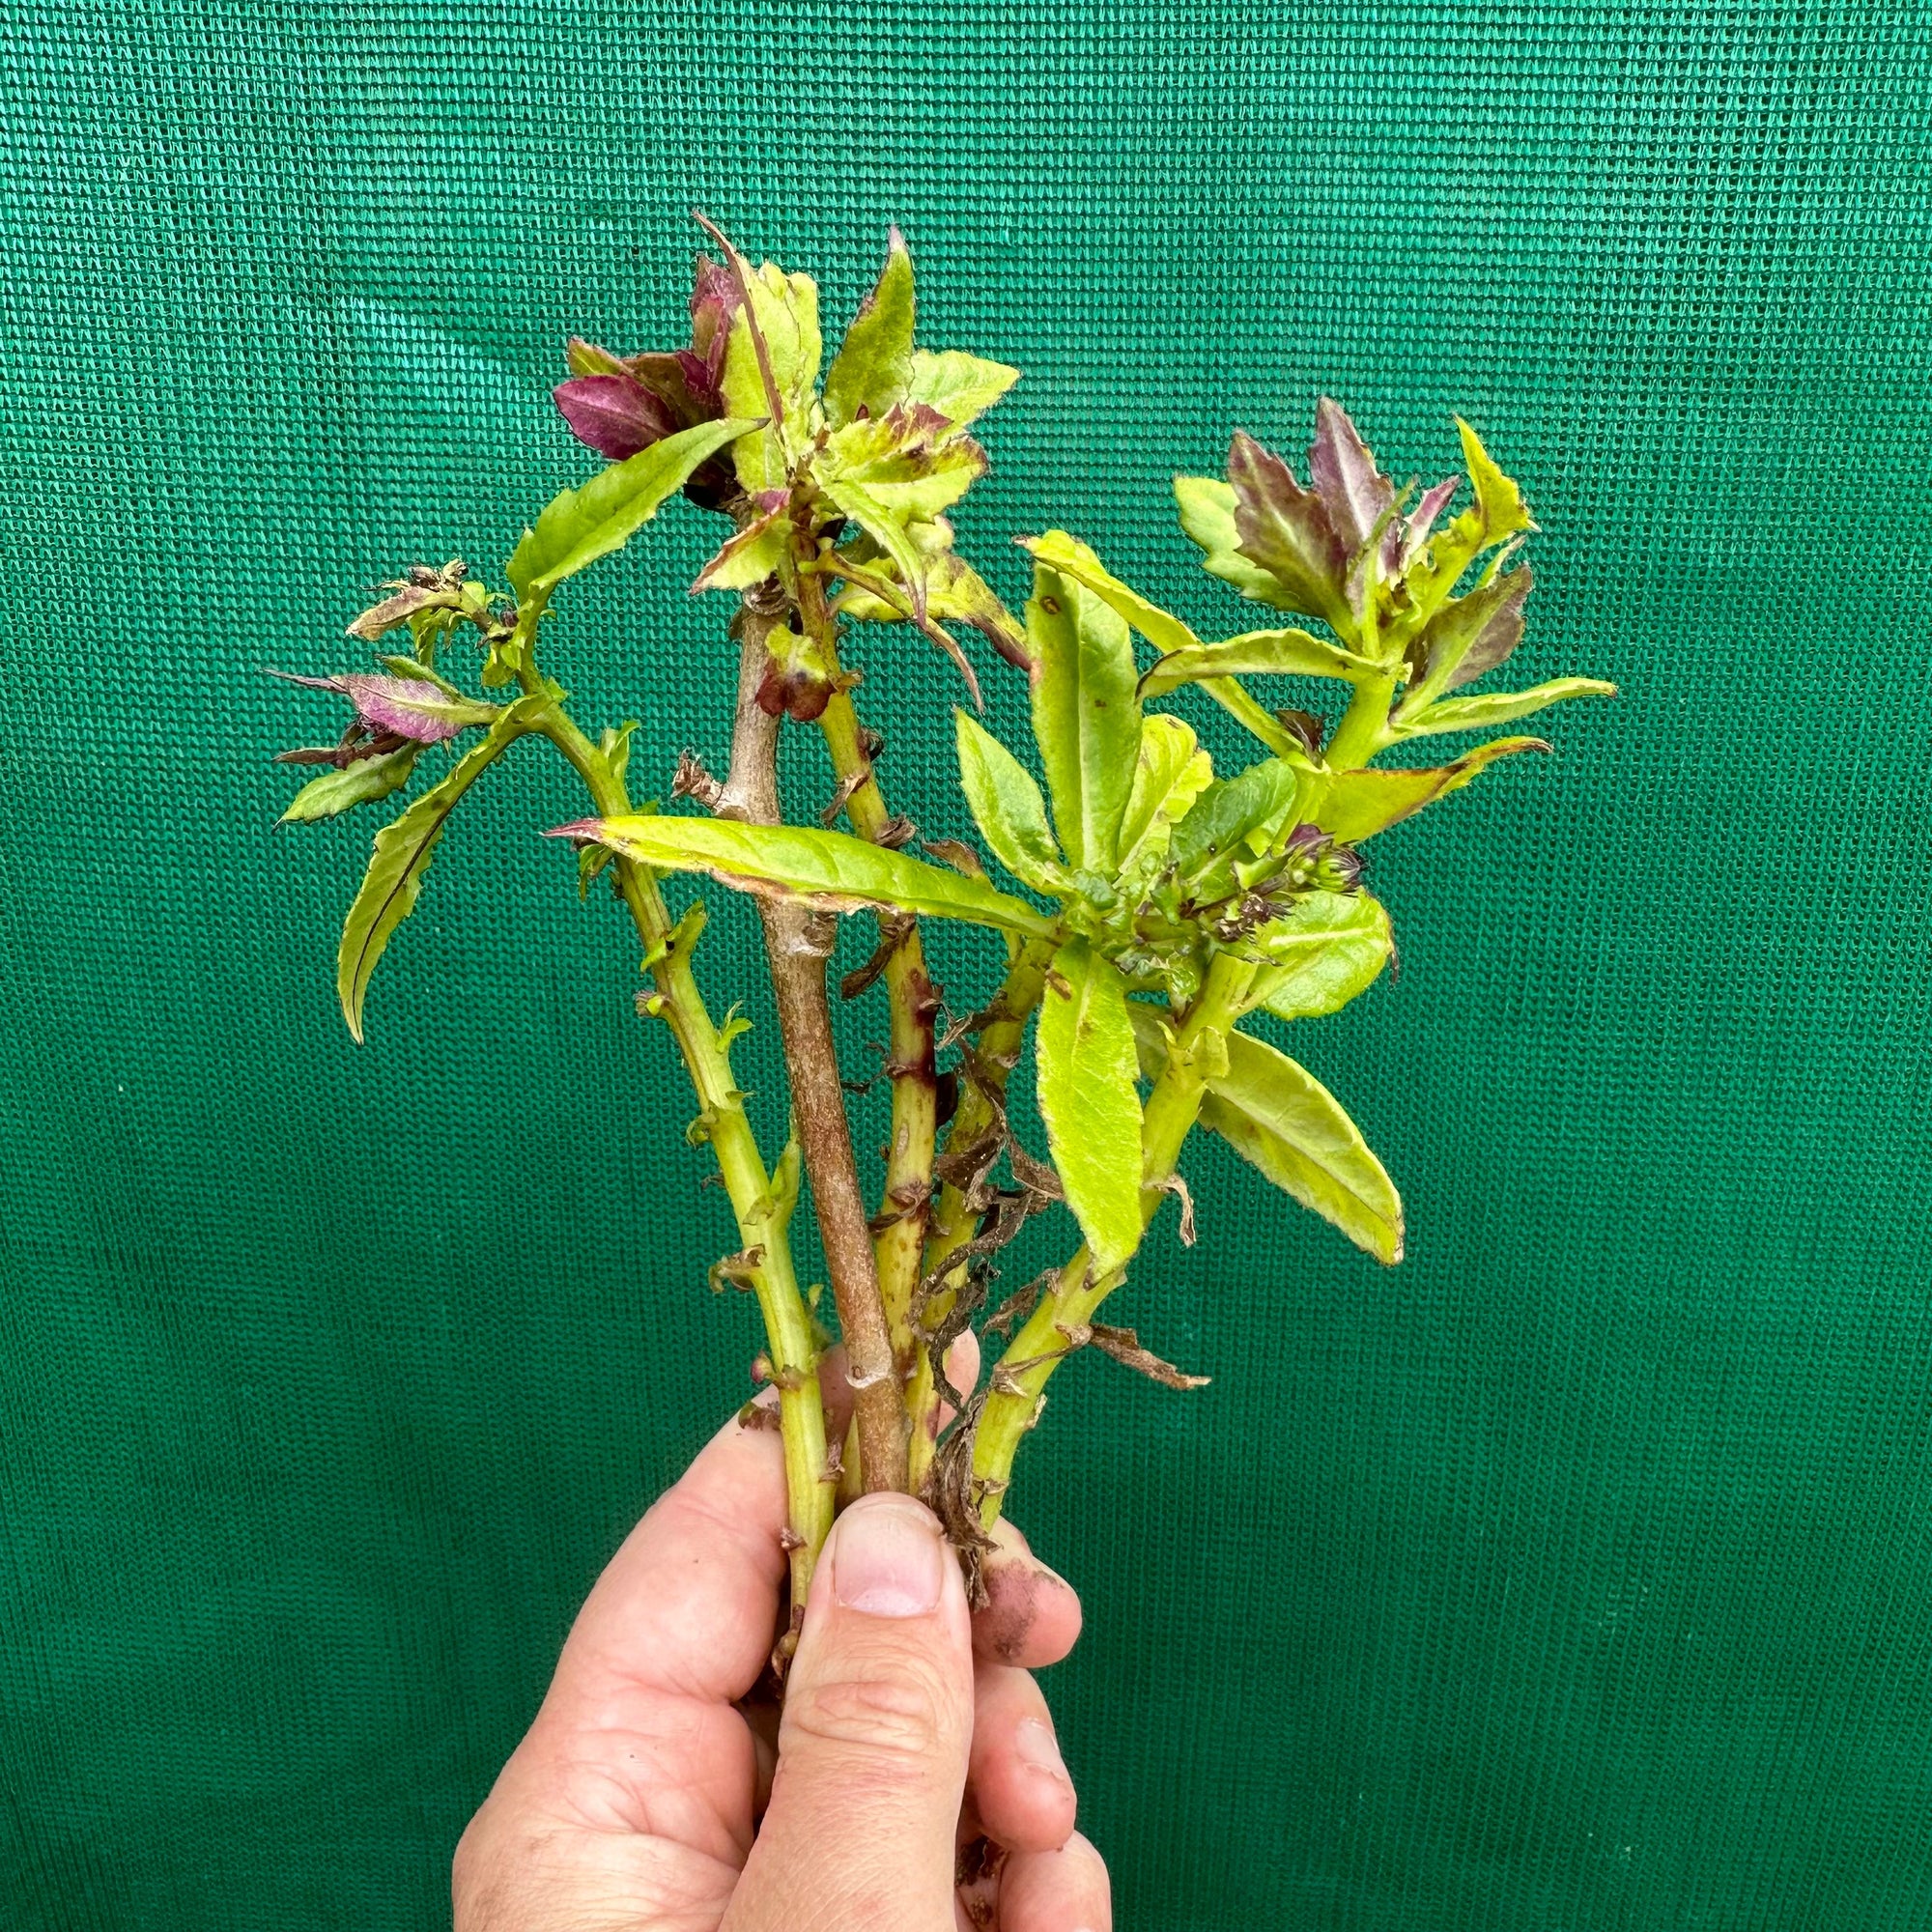 Okinawa Spinach - Gynura crepioides